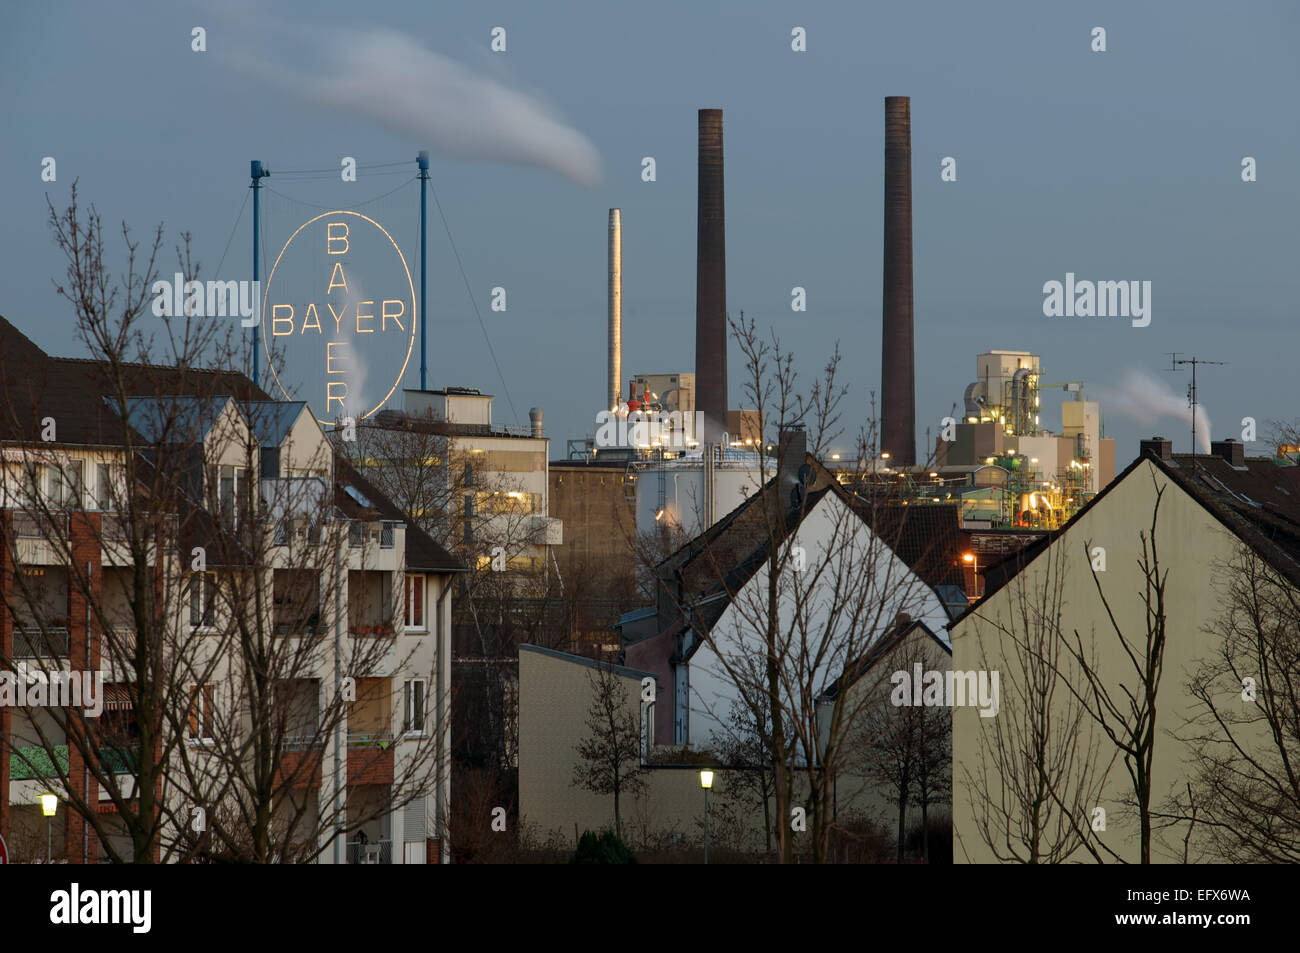 Bayer chemical plant, Leverkusen, North Rhine-Westphalia, Germany. Stock Photo